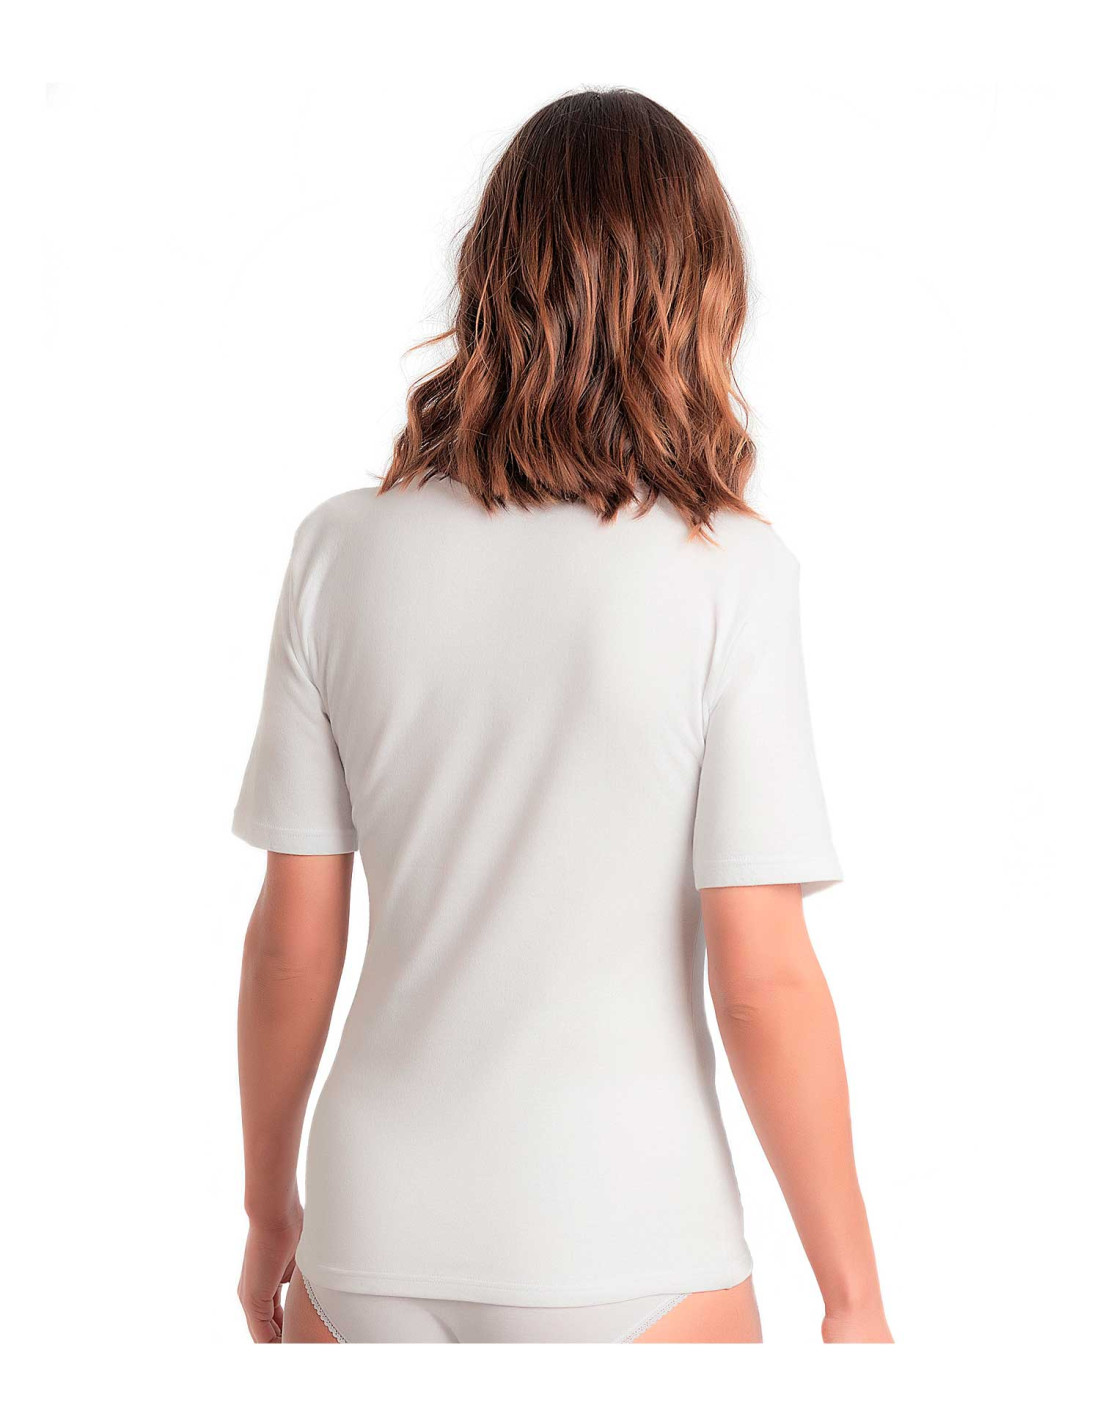 Camiseta interior mujer de algodón manga larga